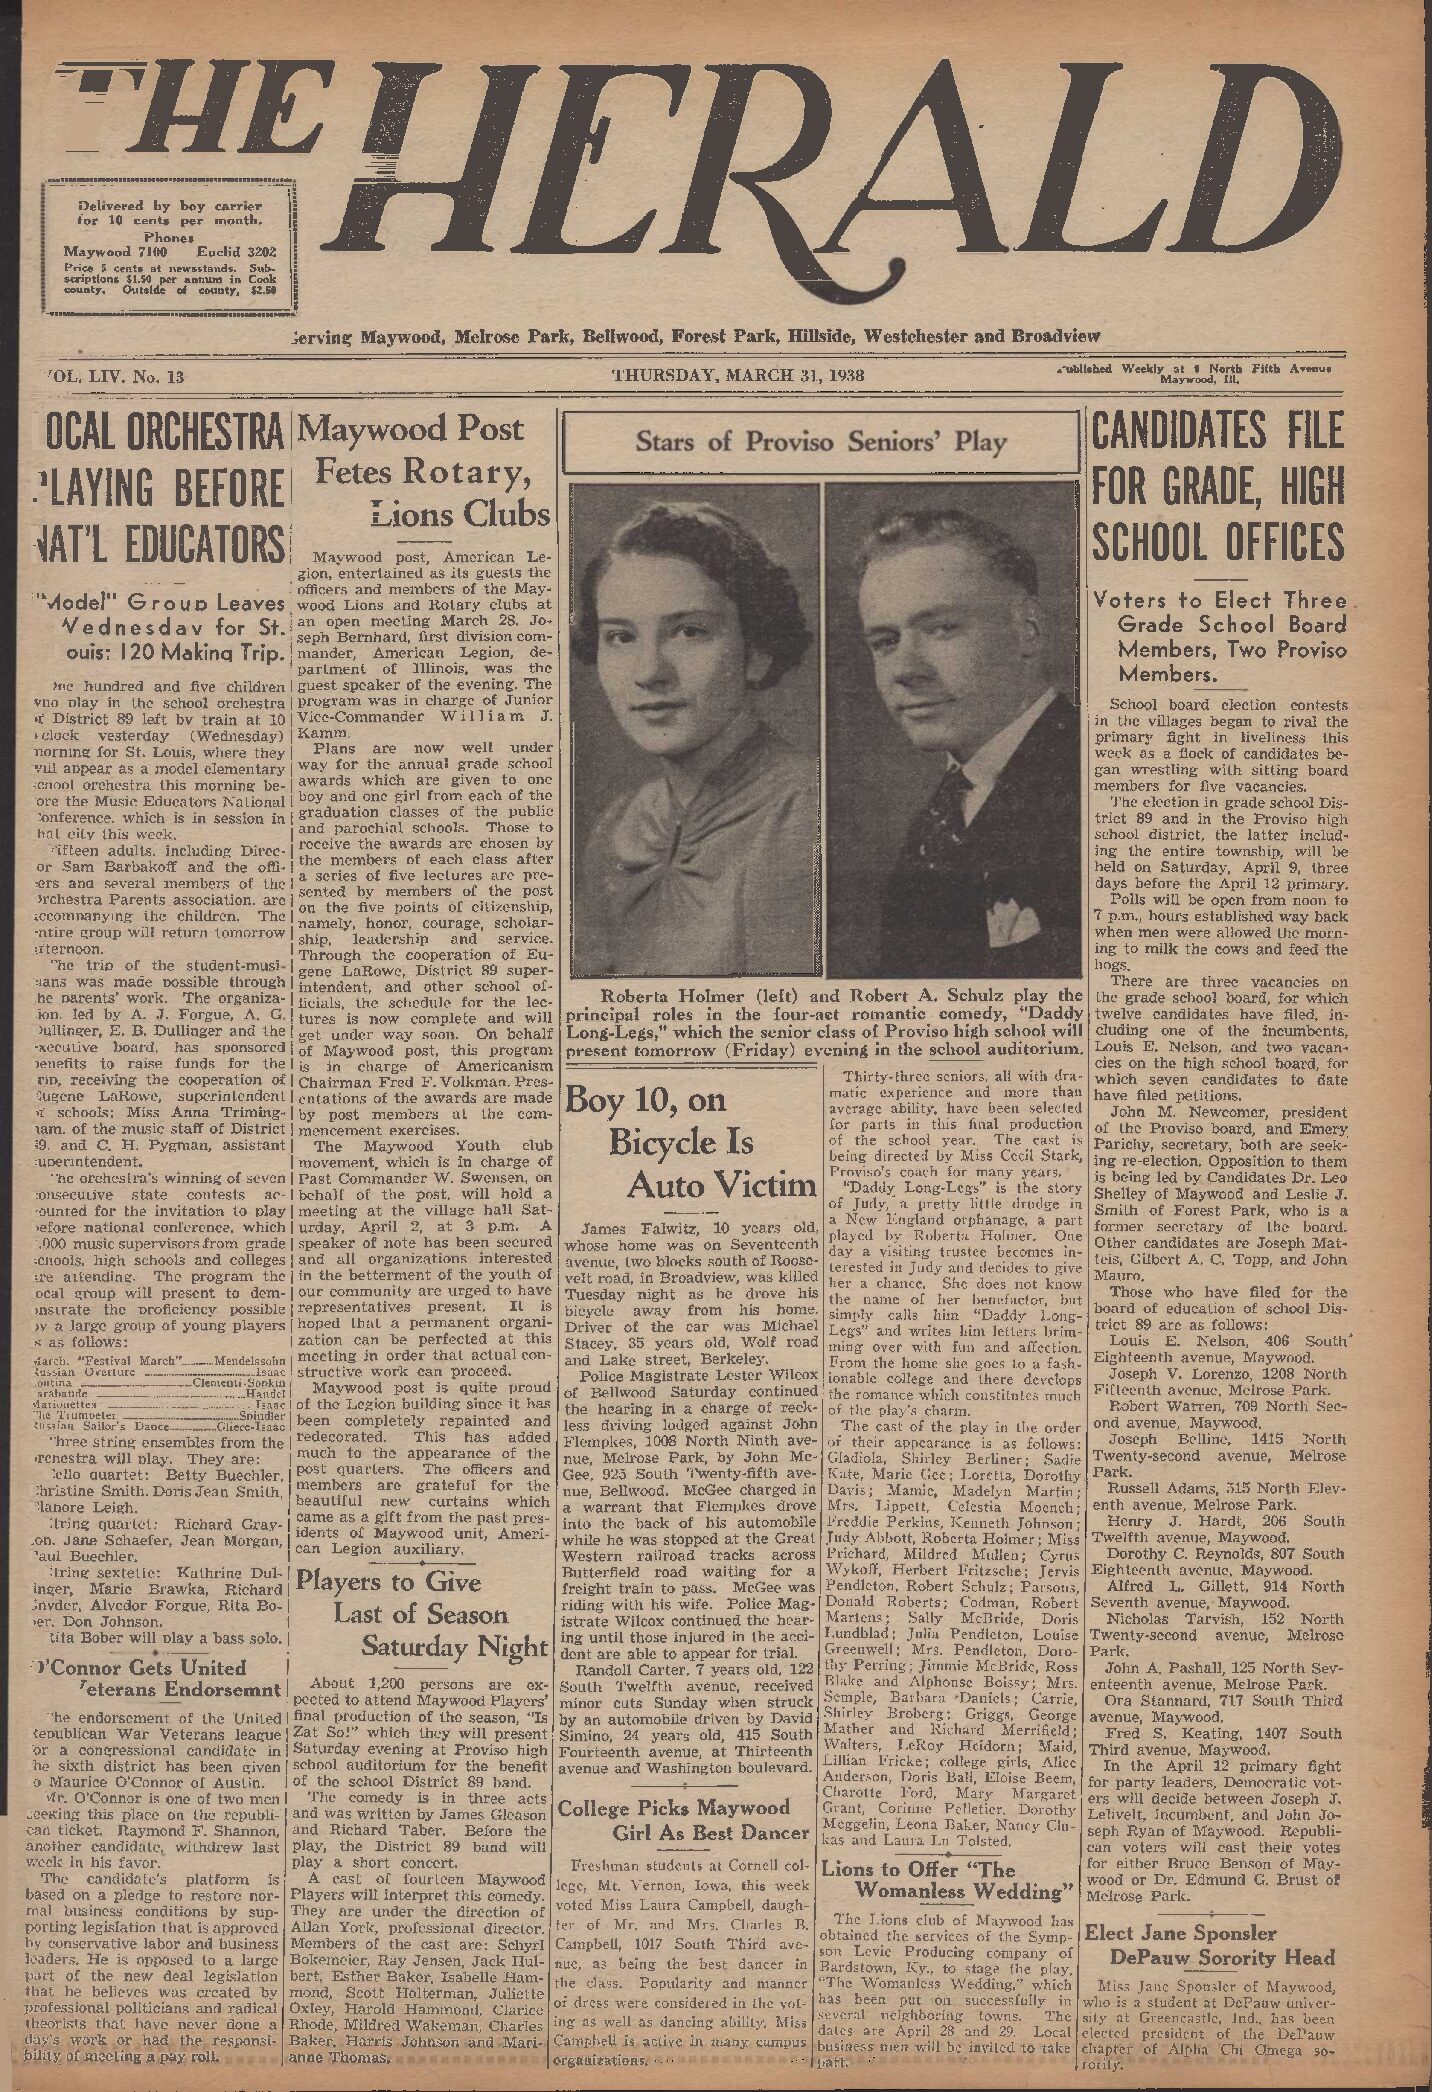 The Herald – 19380331